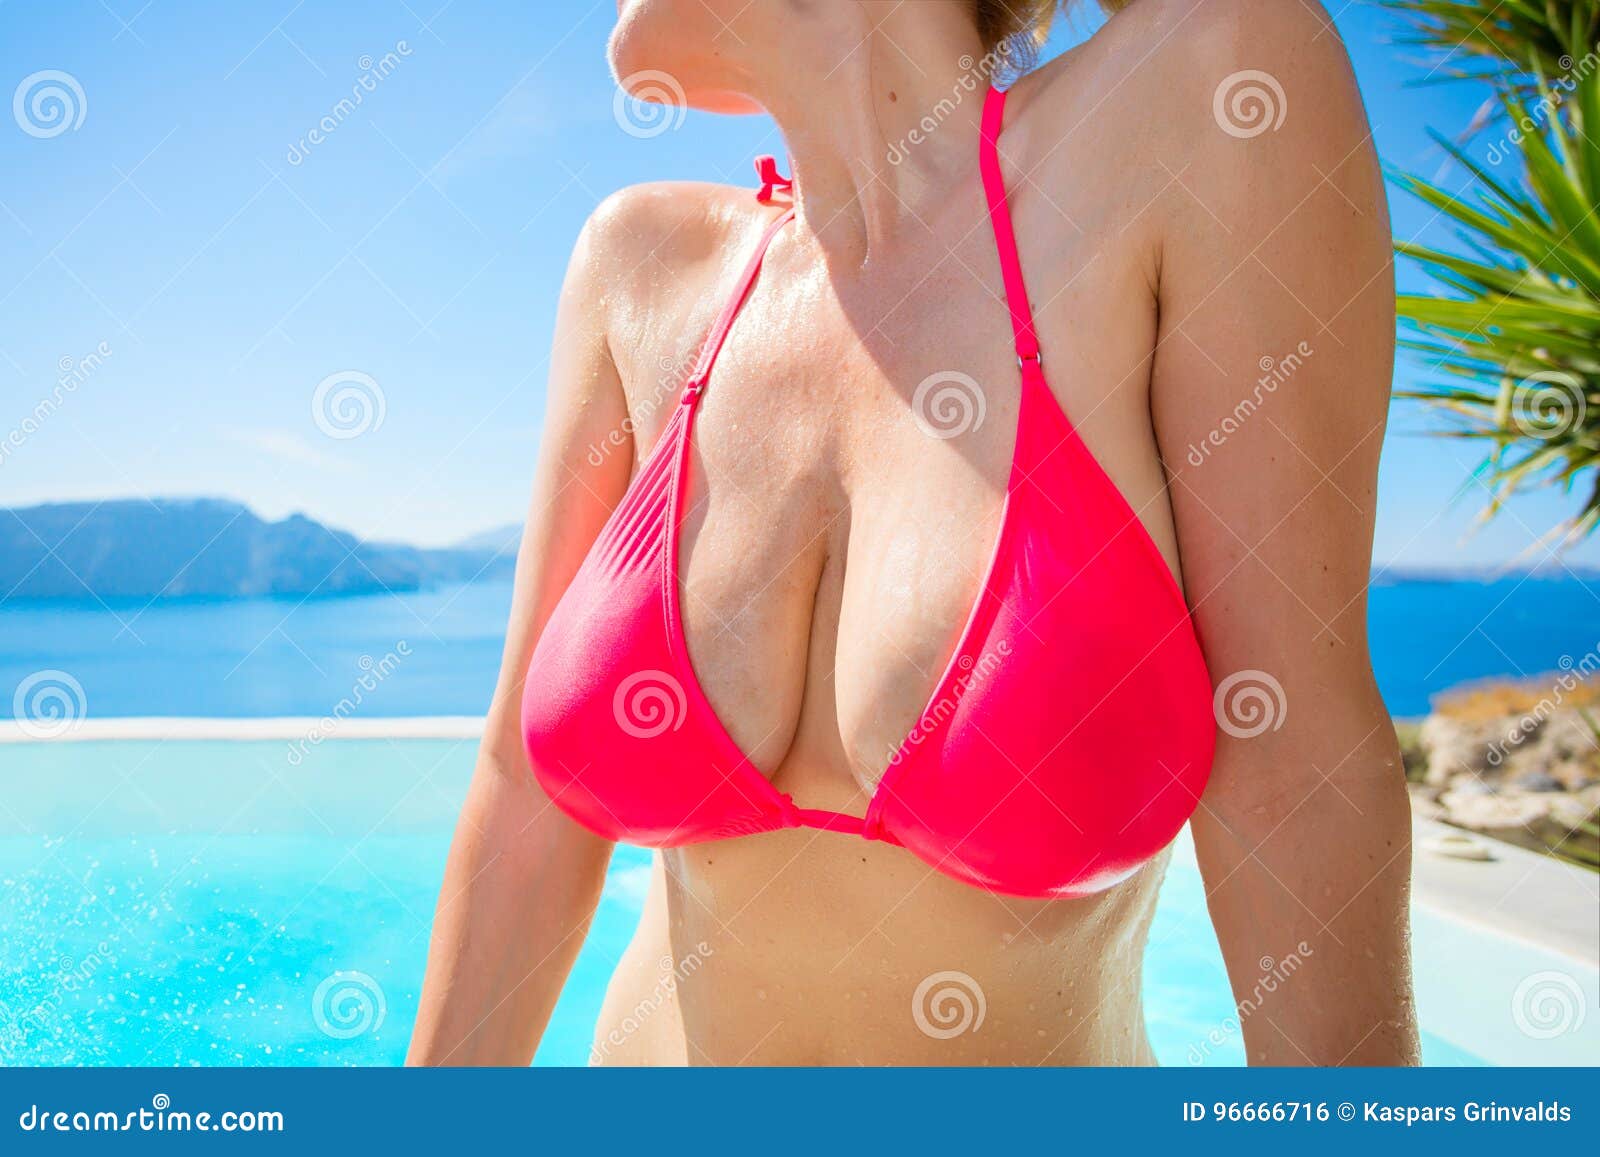 Bikini big boobs in Chrissy Teigen's